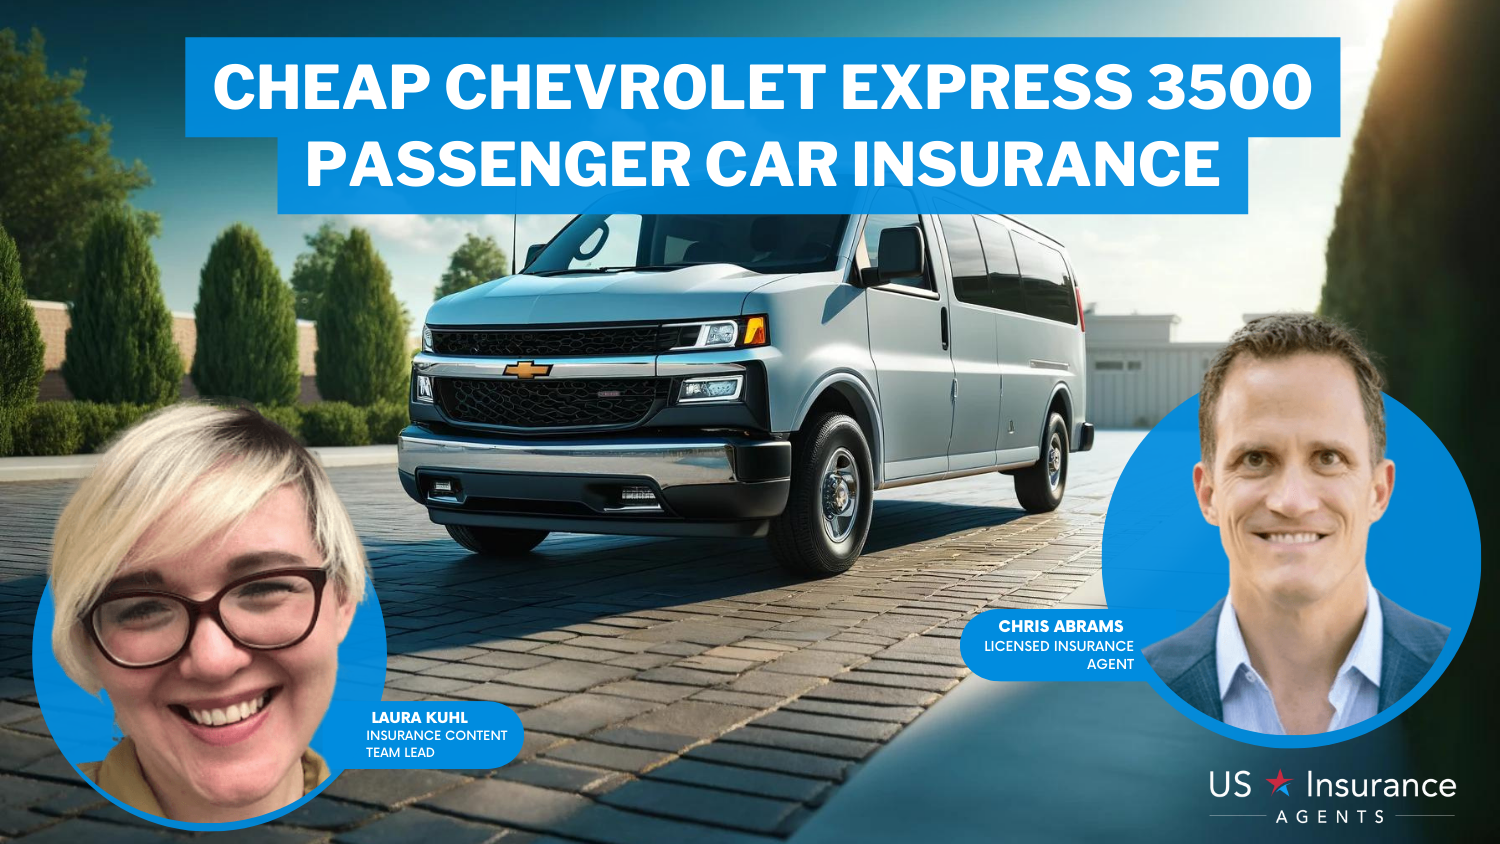 Cheap Chevrolet Express 3500 Passenger Car Insurance: Nationwide, USAA and Travelers